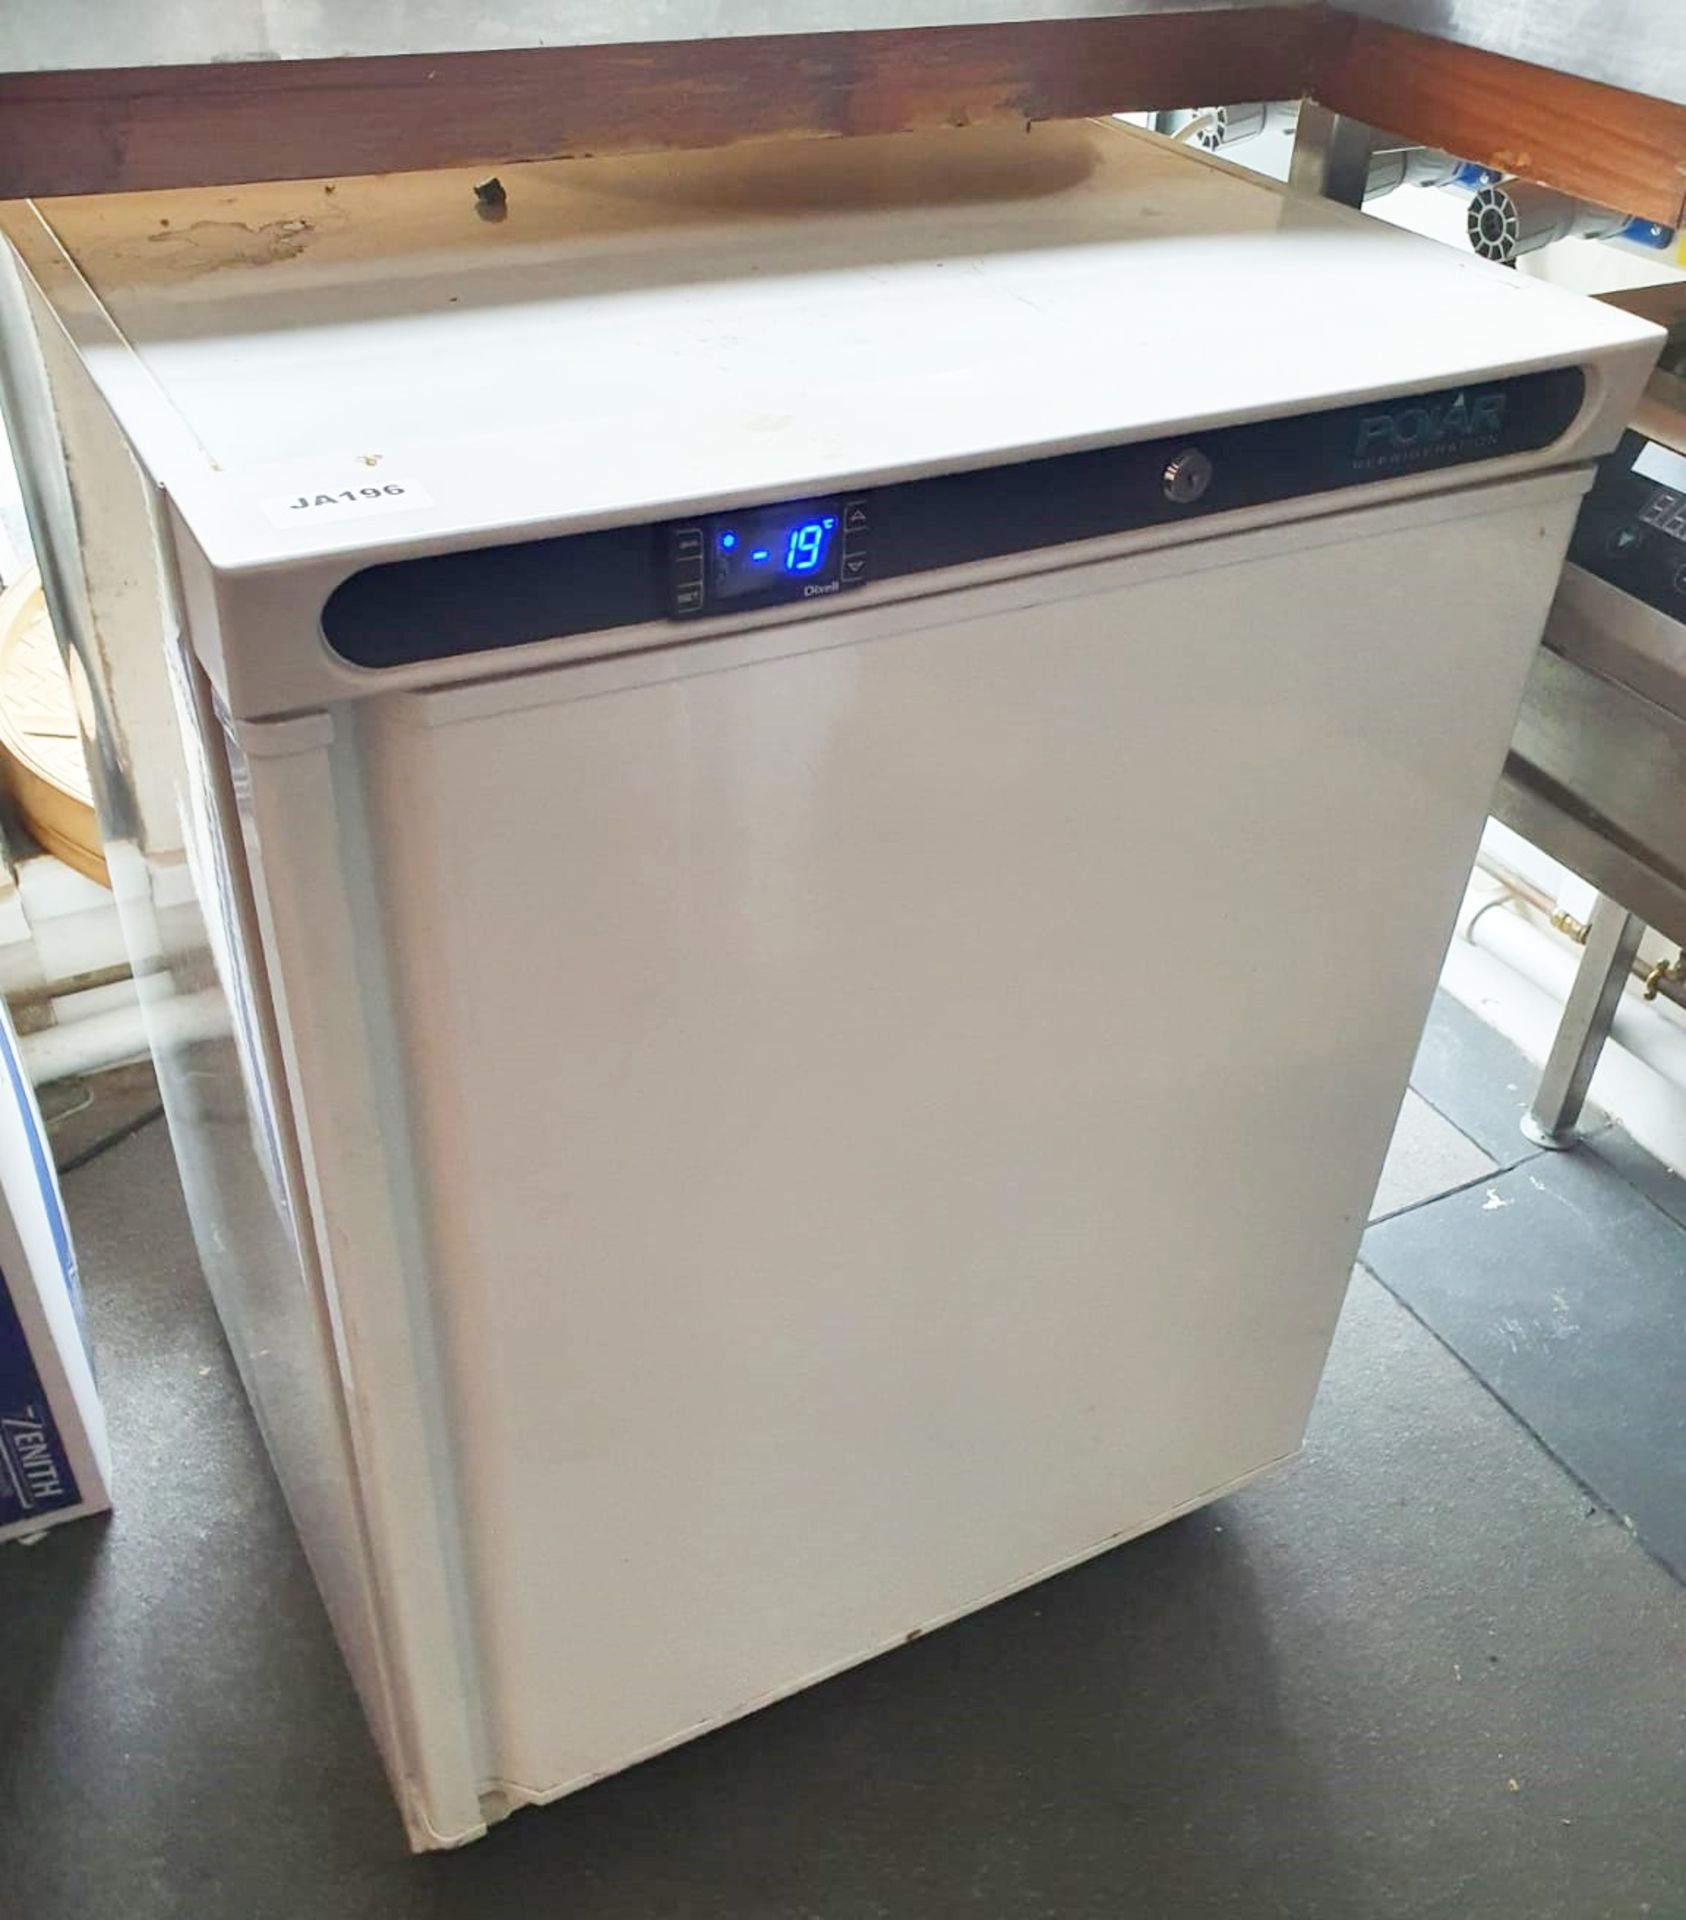 1 x Polar C series Undercounter Commercial Freezer - Model CD611 - 140l Capacity - H85 x W60 x D60 - Image 3 of 4